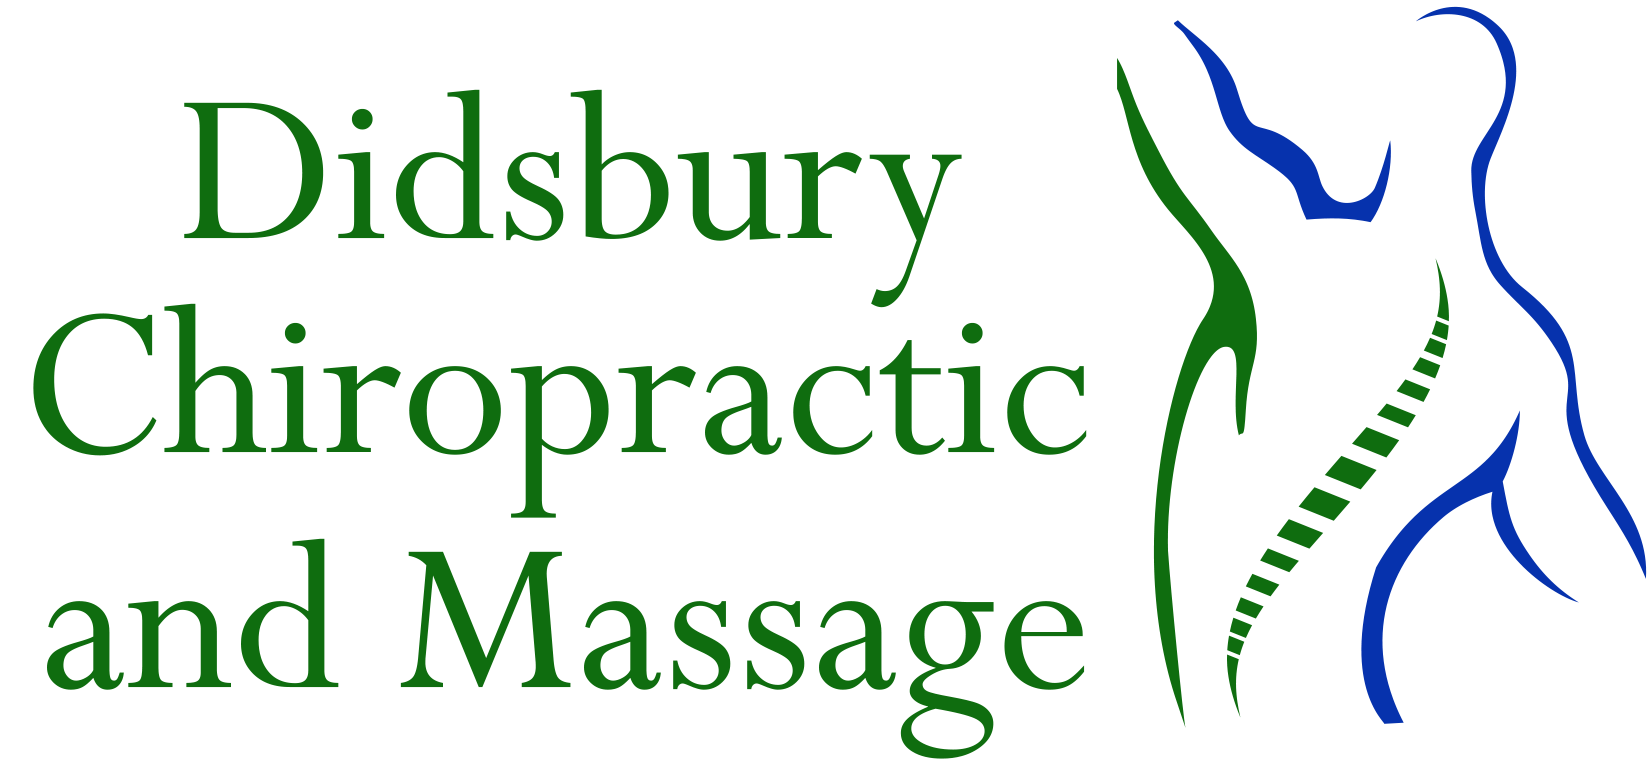 Didsbury Chiropractic and Massage